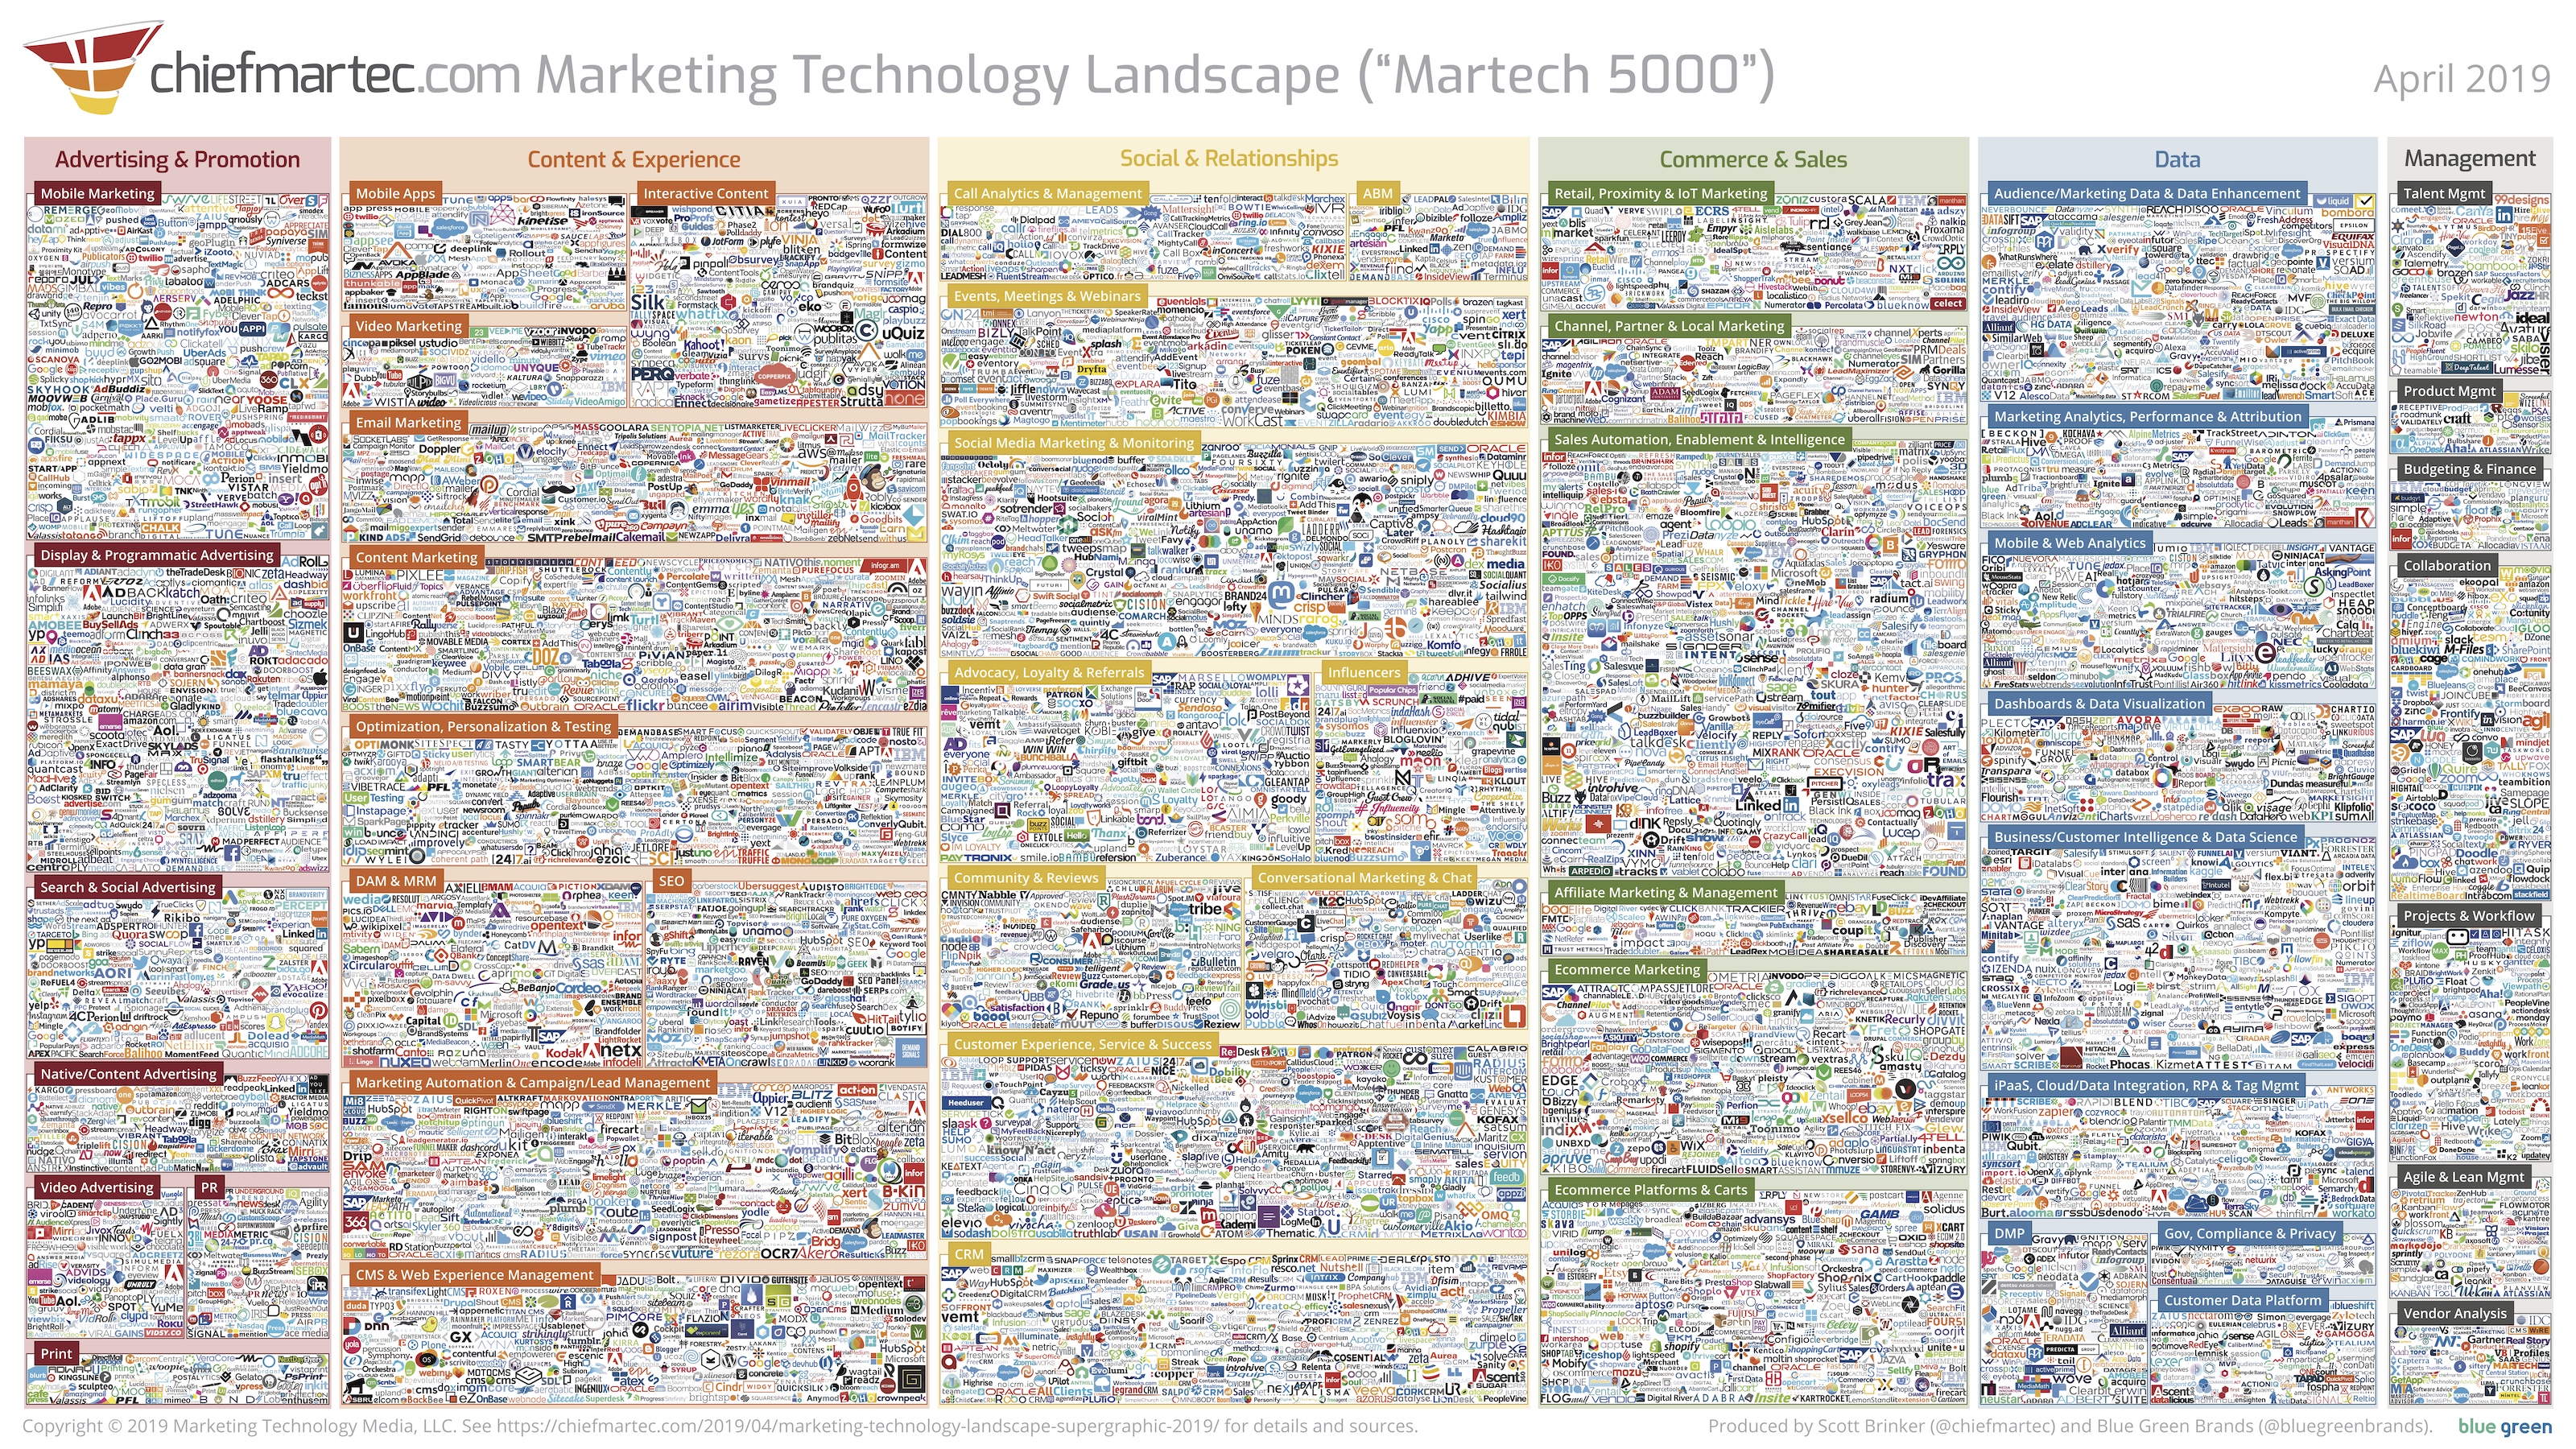 Marketing Technology Landscape - Martech 5000